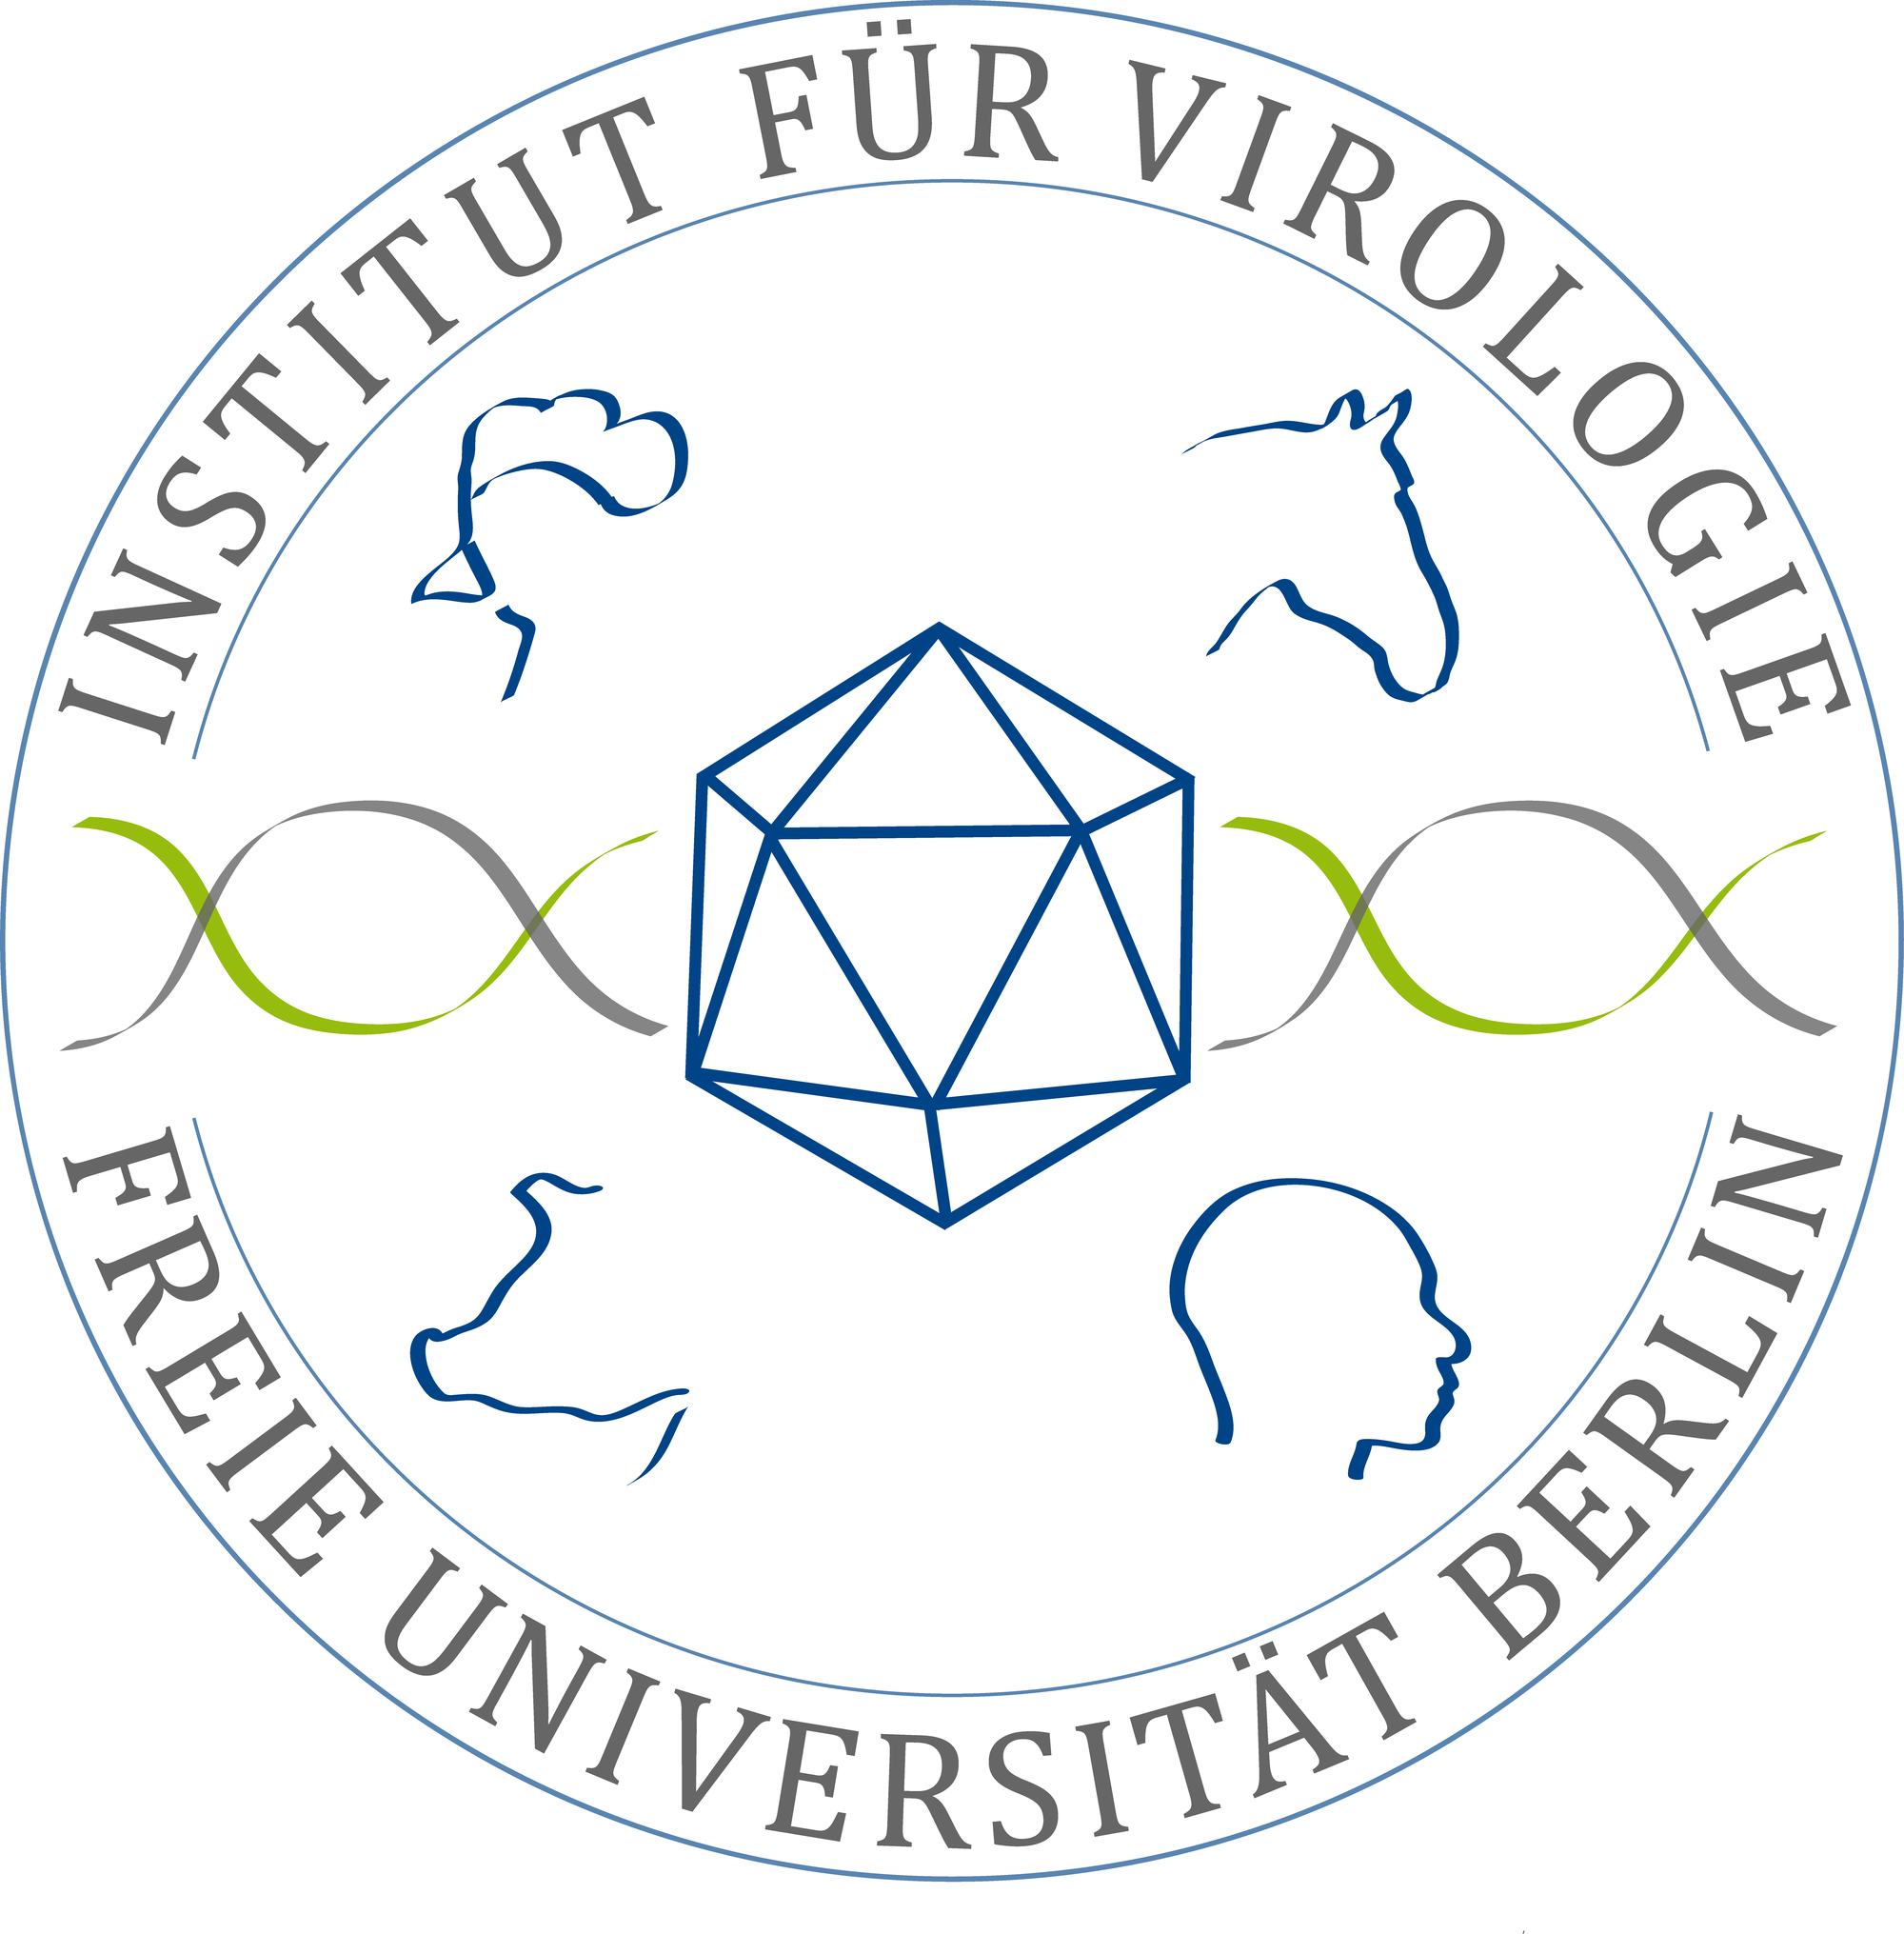 Logo Virologie